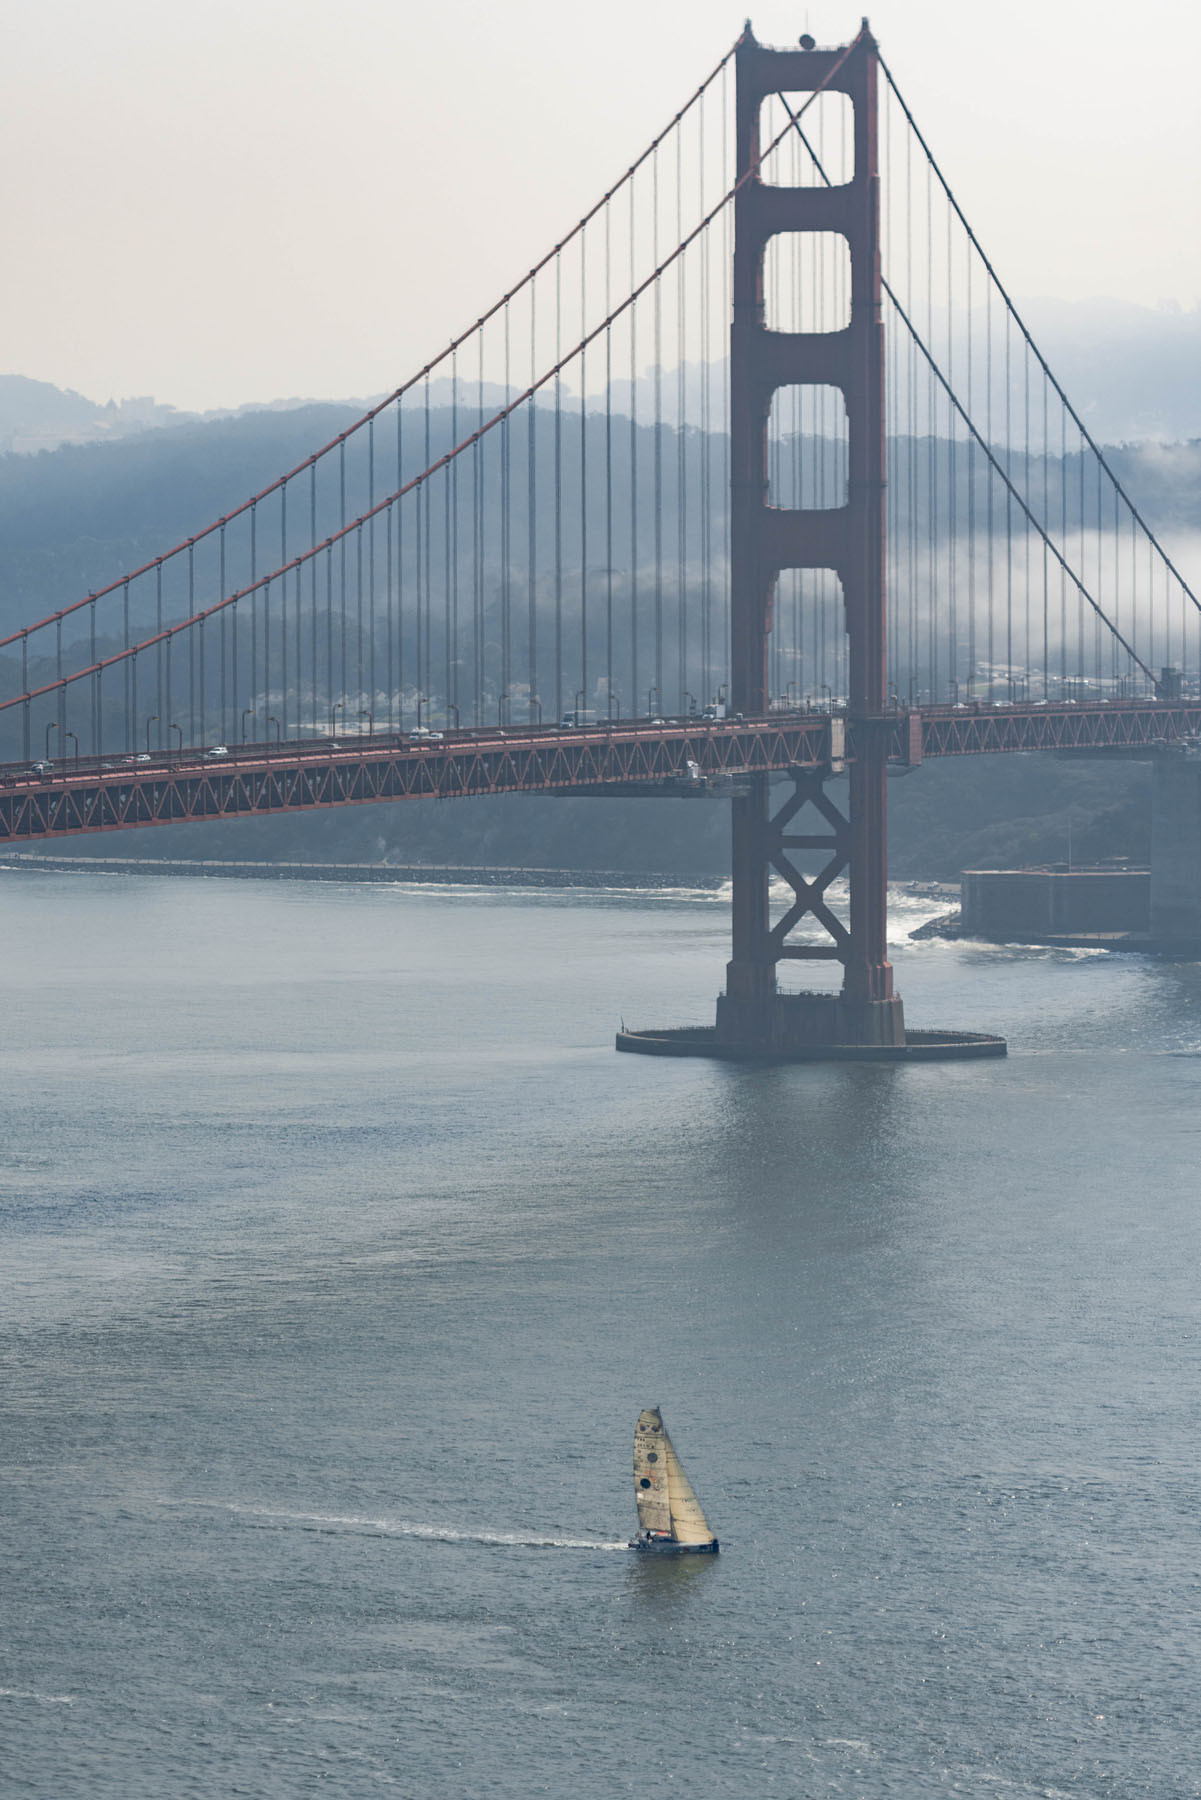 Philippe Jamotte and Golden Gate Bridge